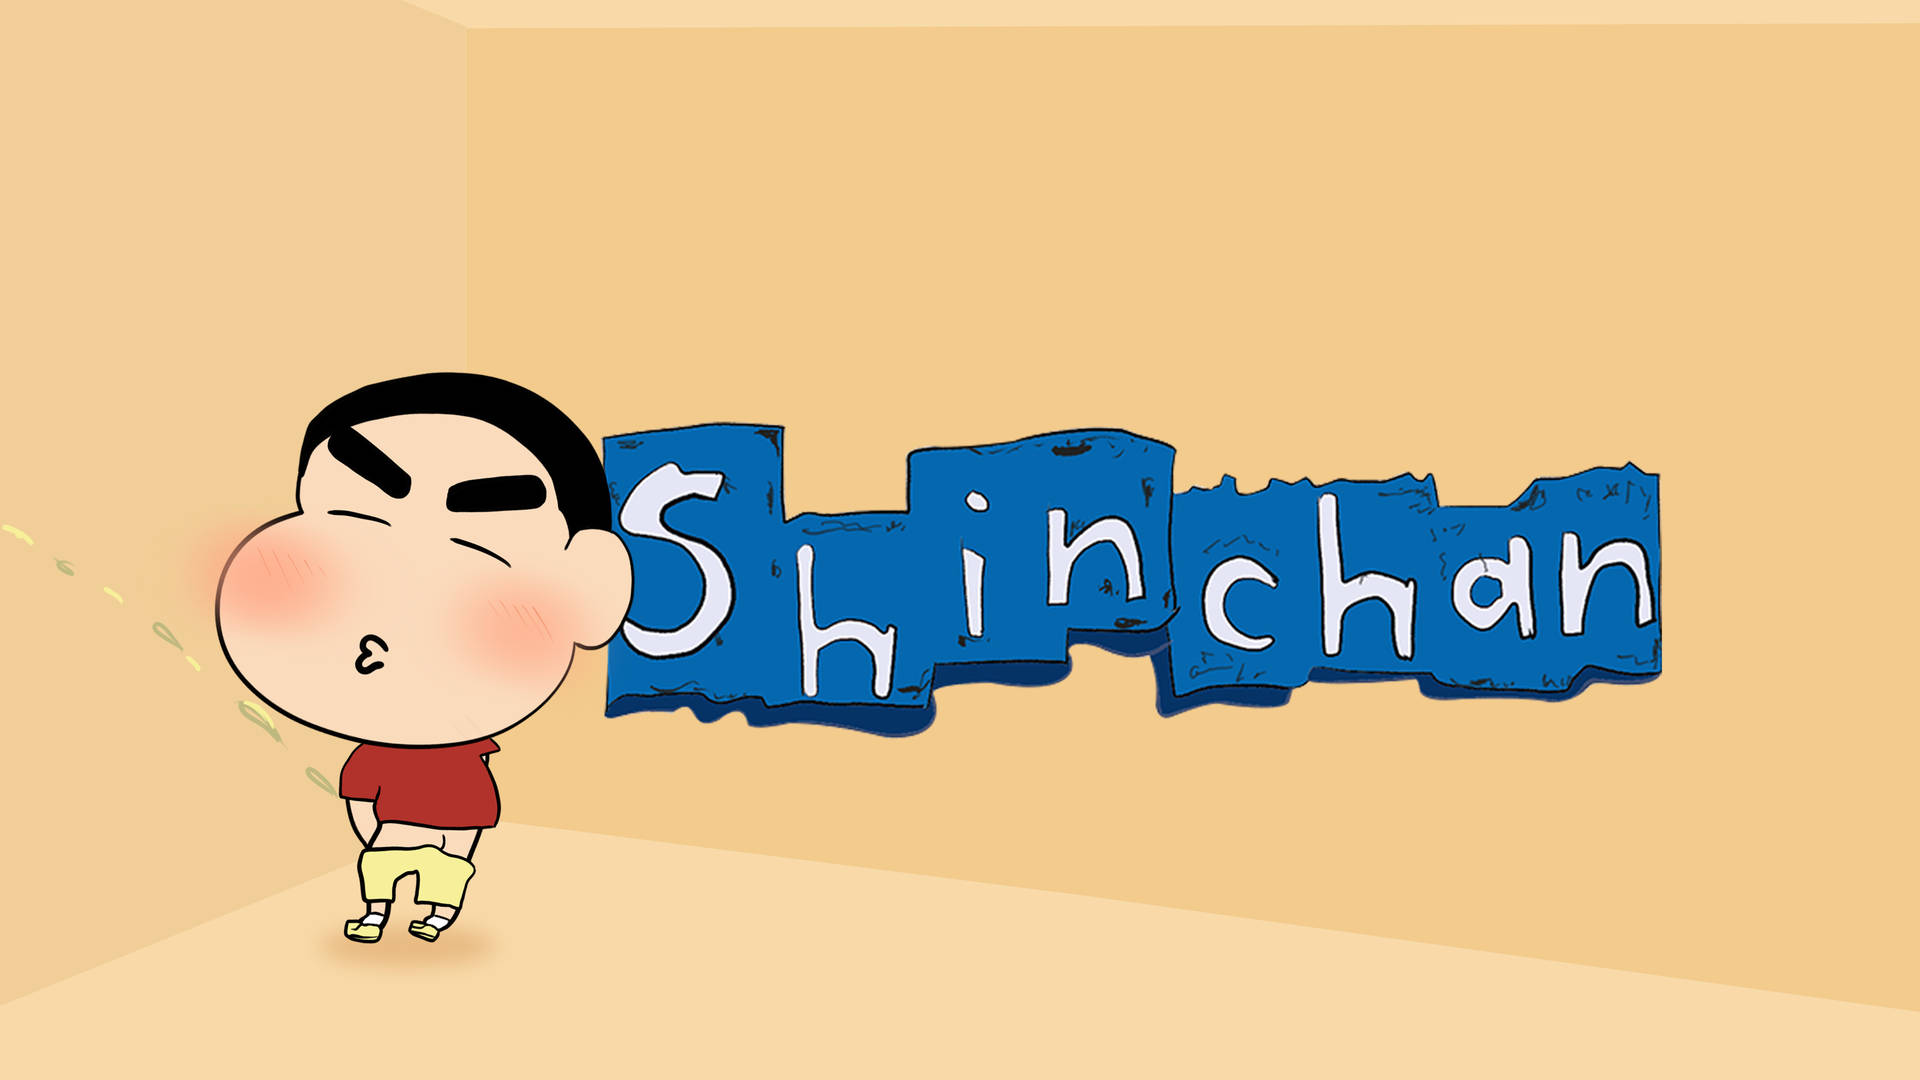 Peeing Shin Chan Cartoon Logo Background